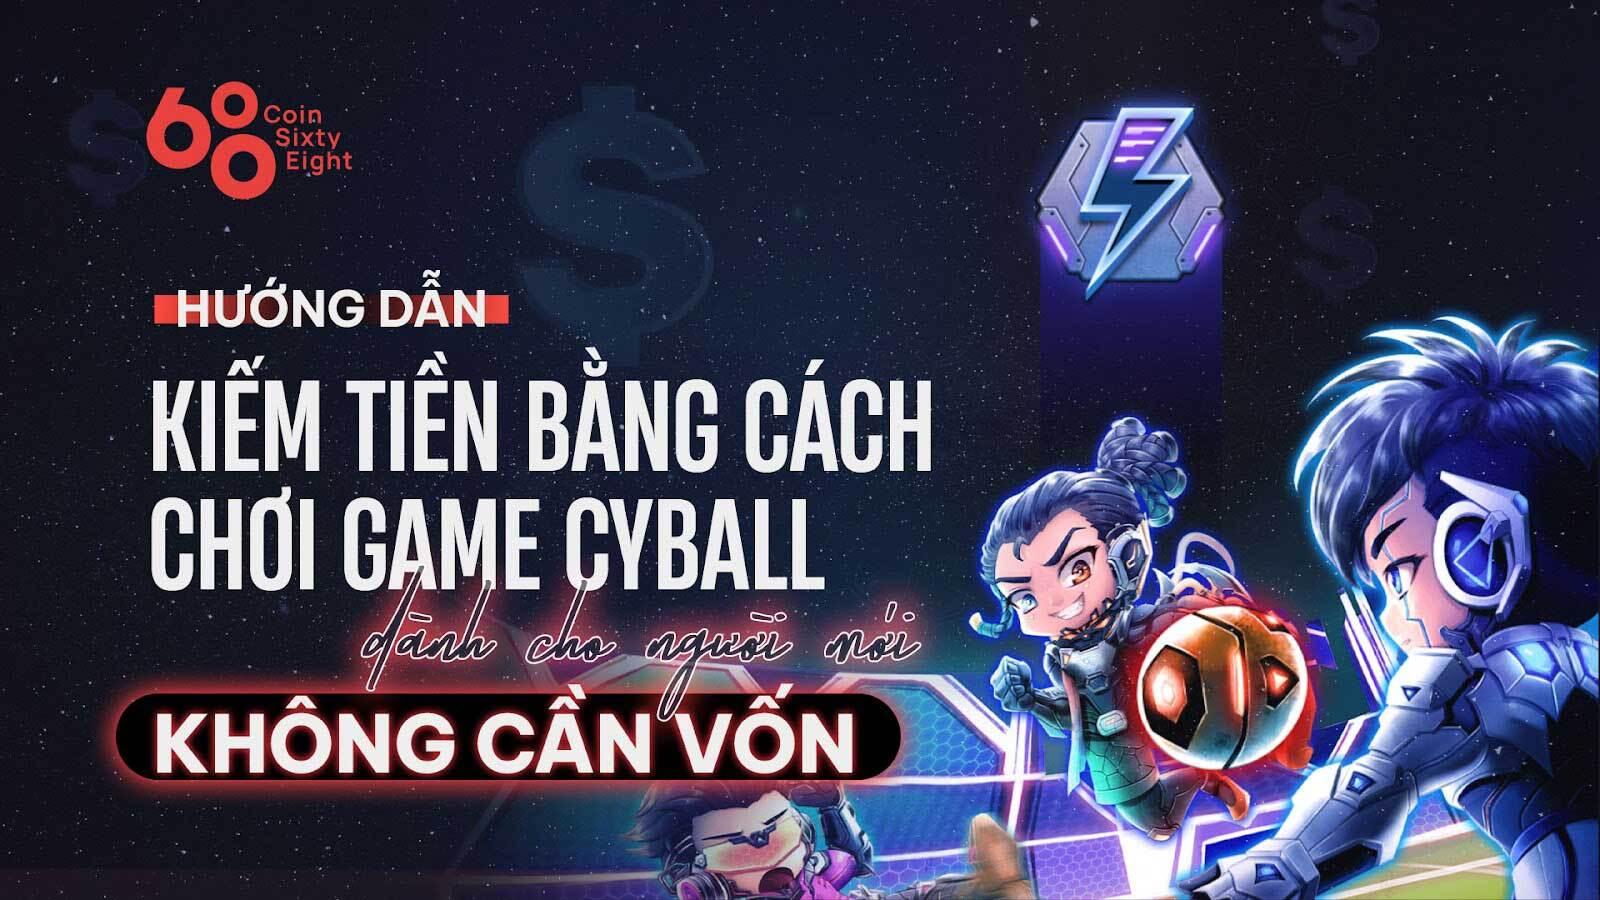 huong-dan-kiem-tien-bang-cach-choi-game-cyball-danh-cho-nguoi-moi-khong-can-von